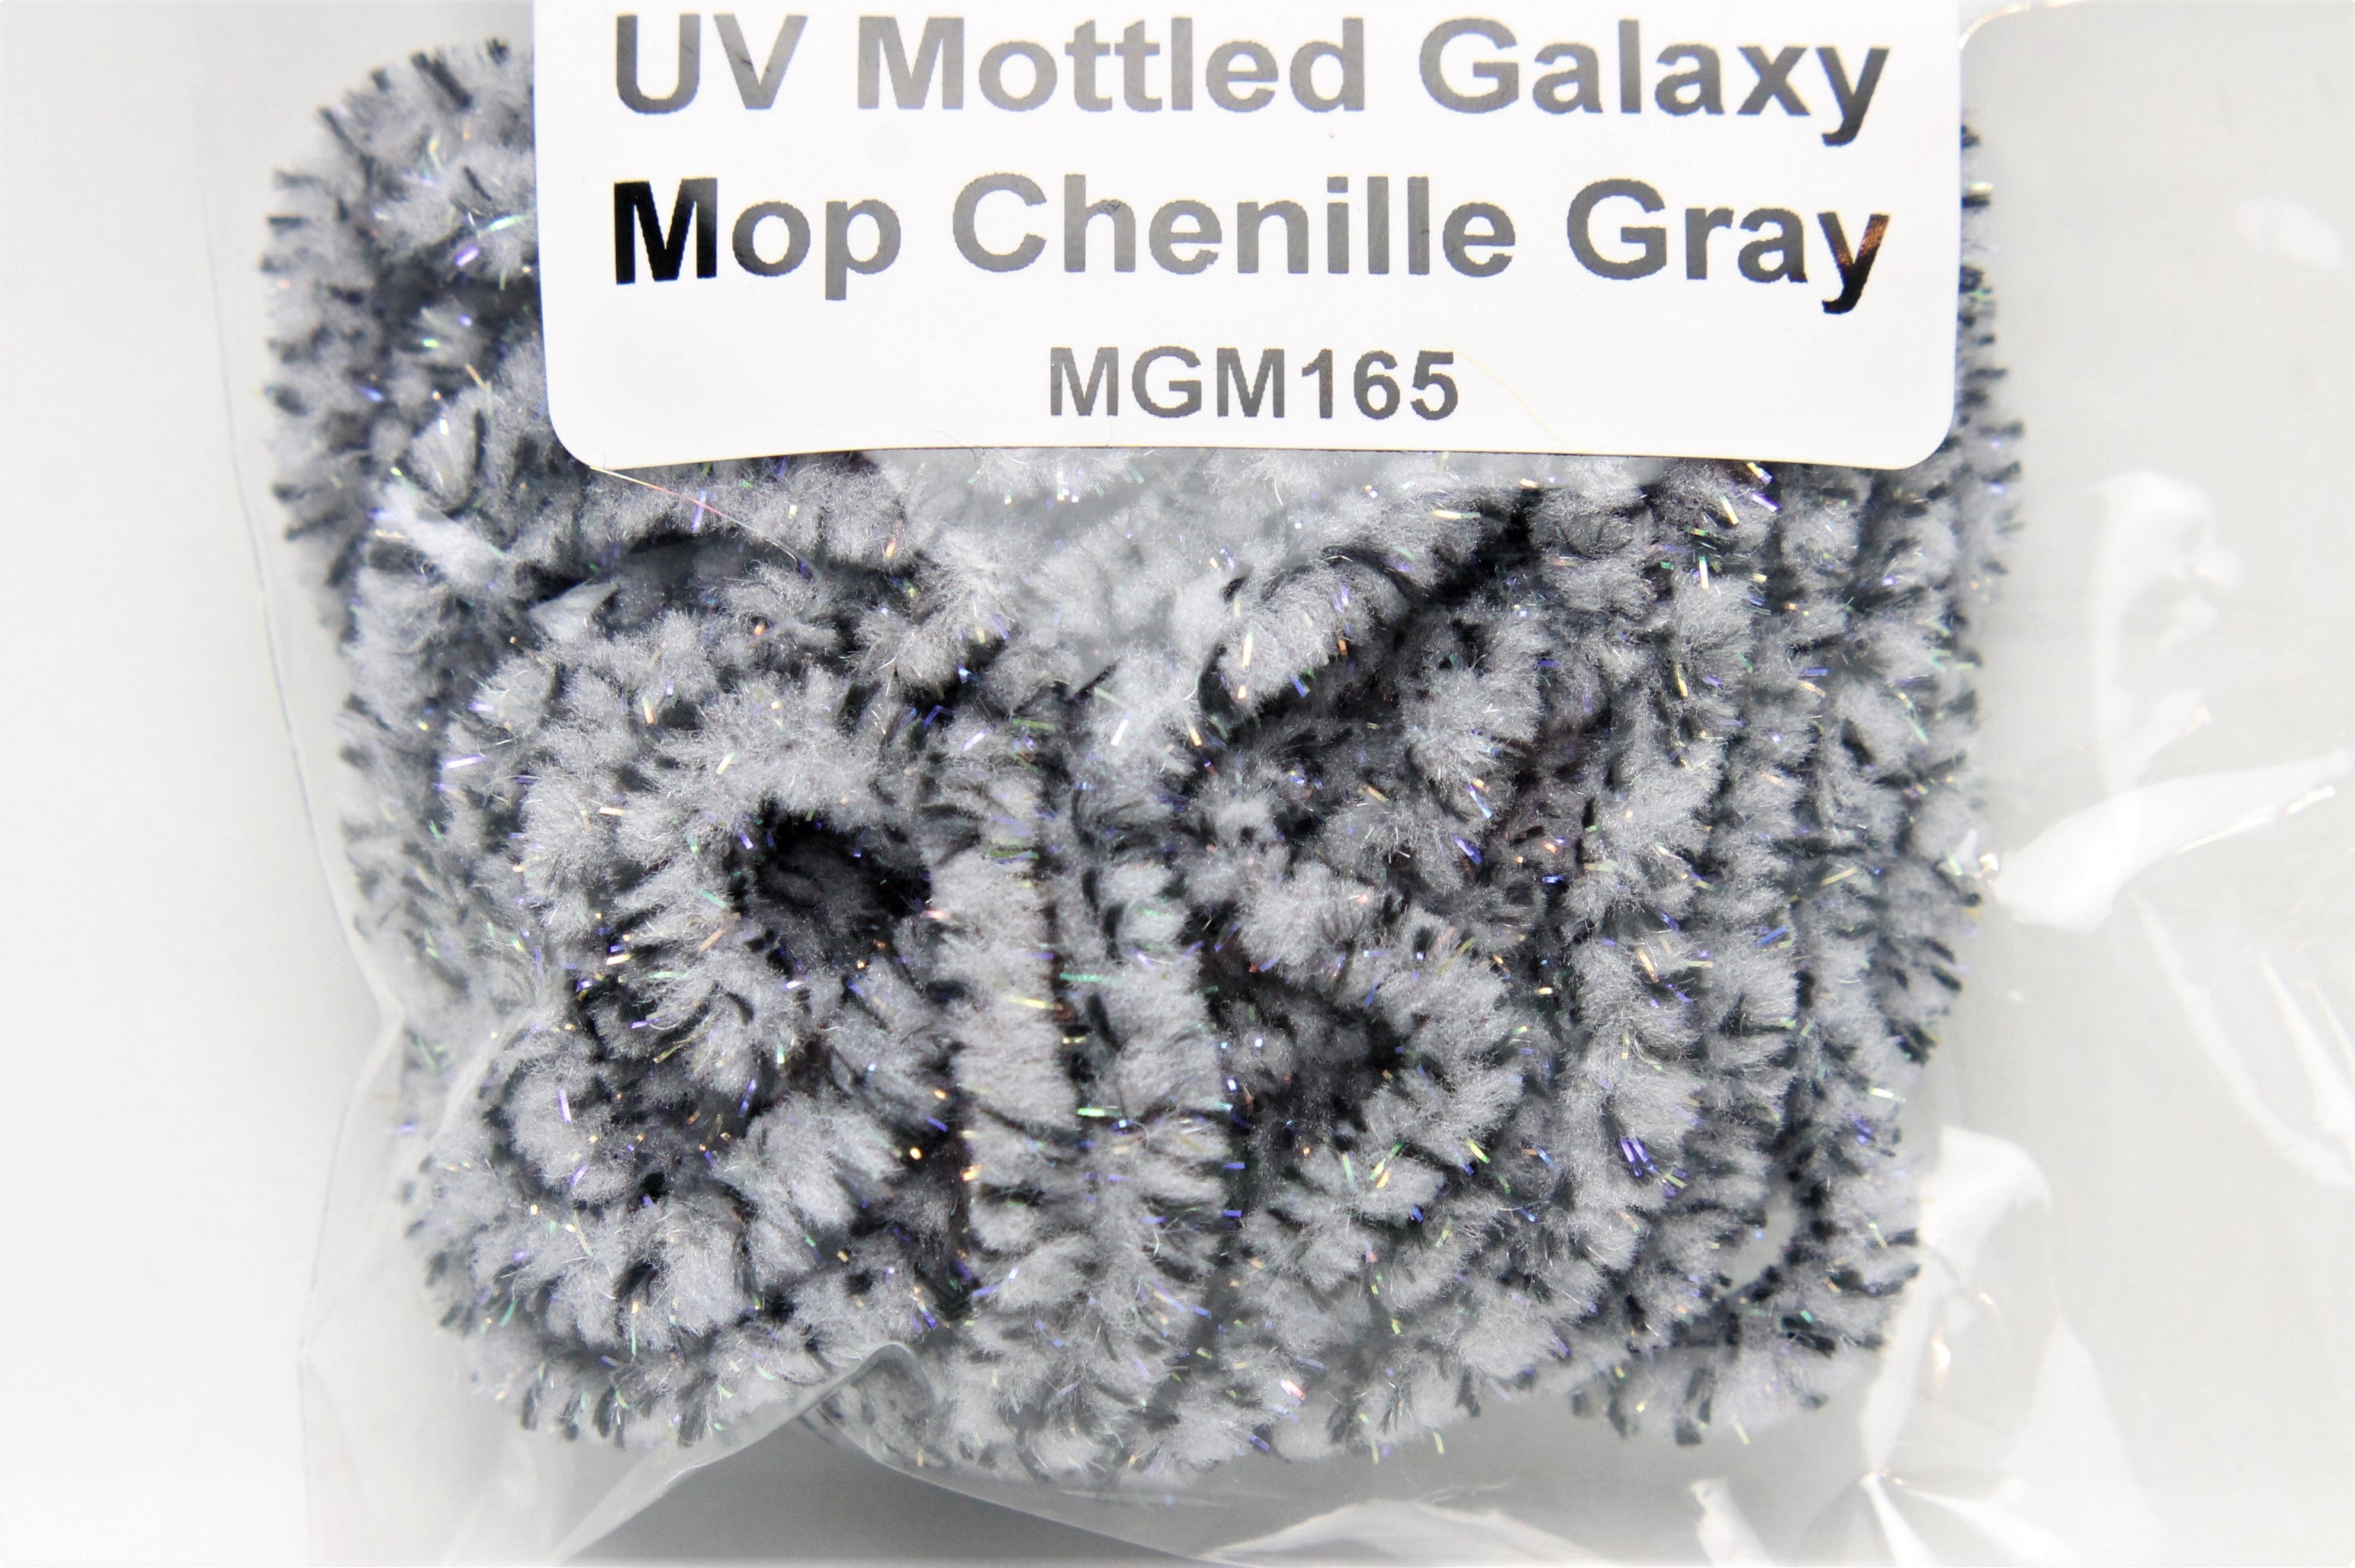 Mop Chenille - UV Mottled Galaxy